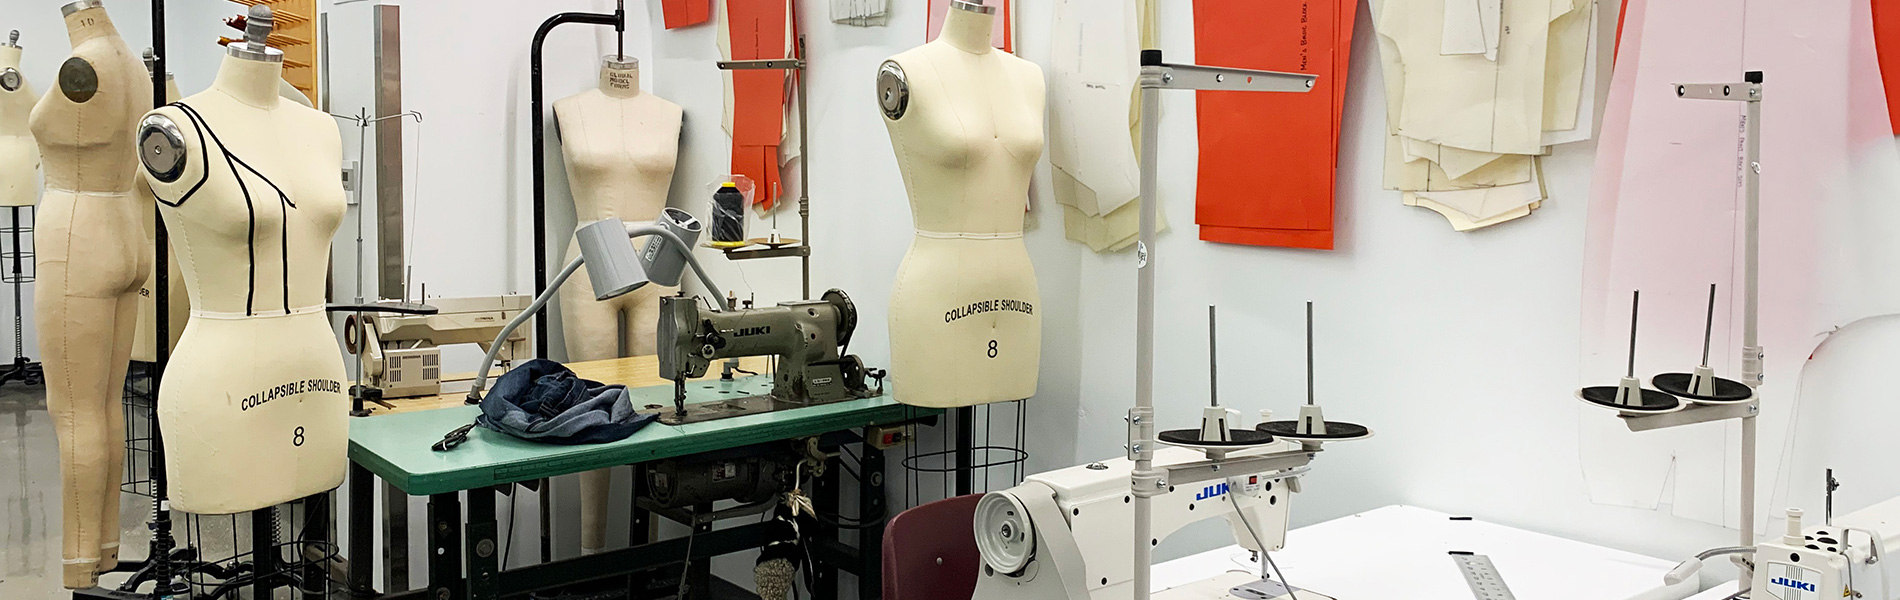 Fashion Design program sewing classroom